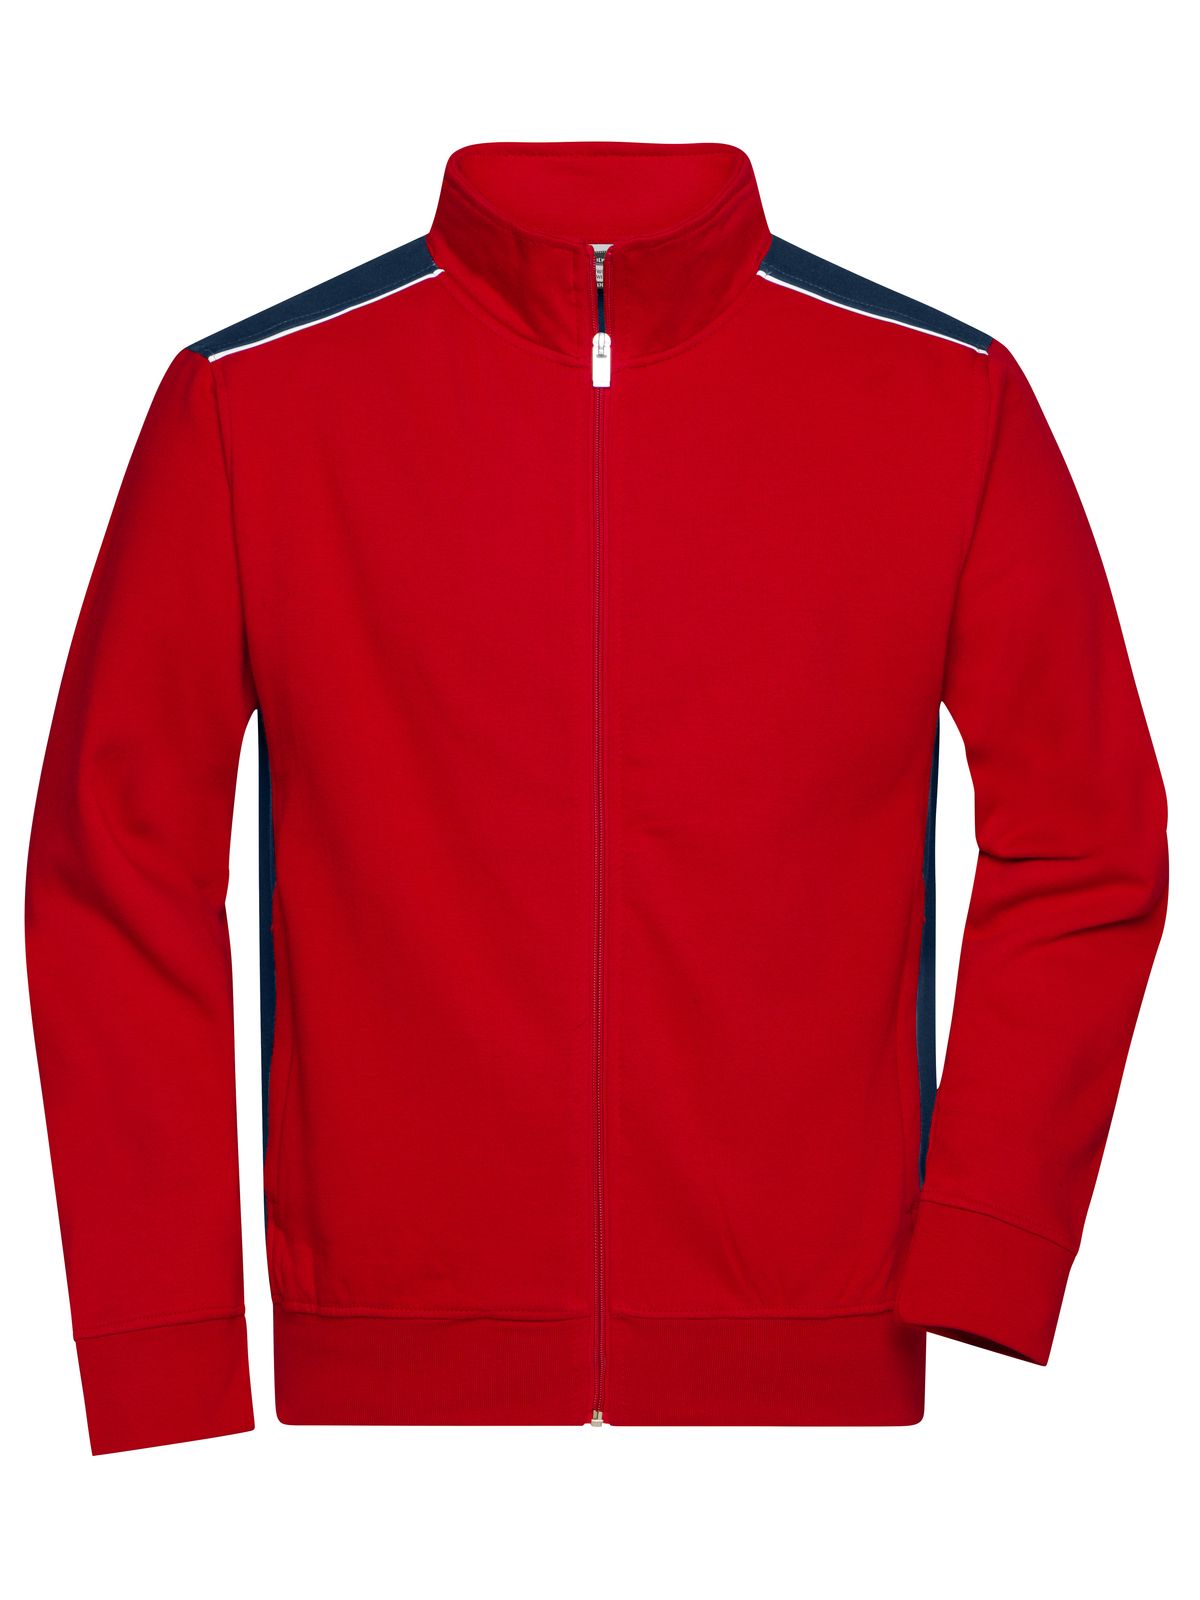 mens-workwear-sweat-jacket-color-red-navy.webp